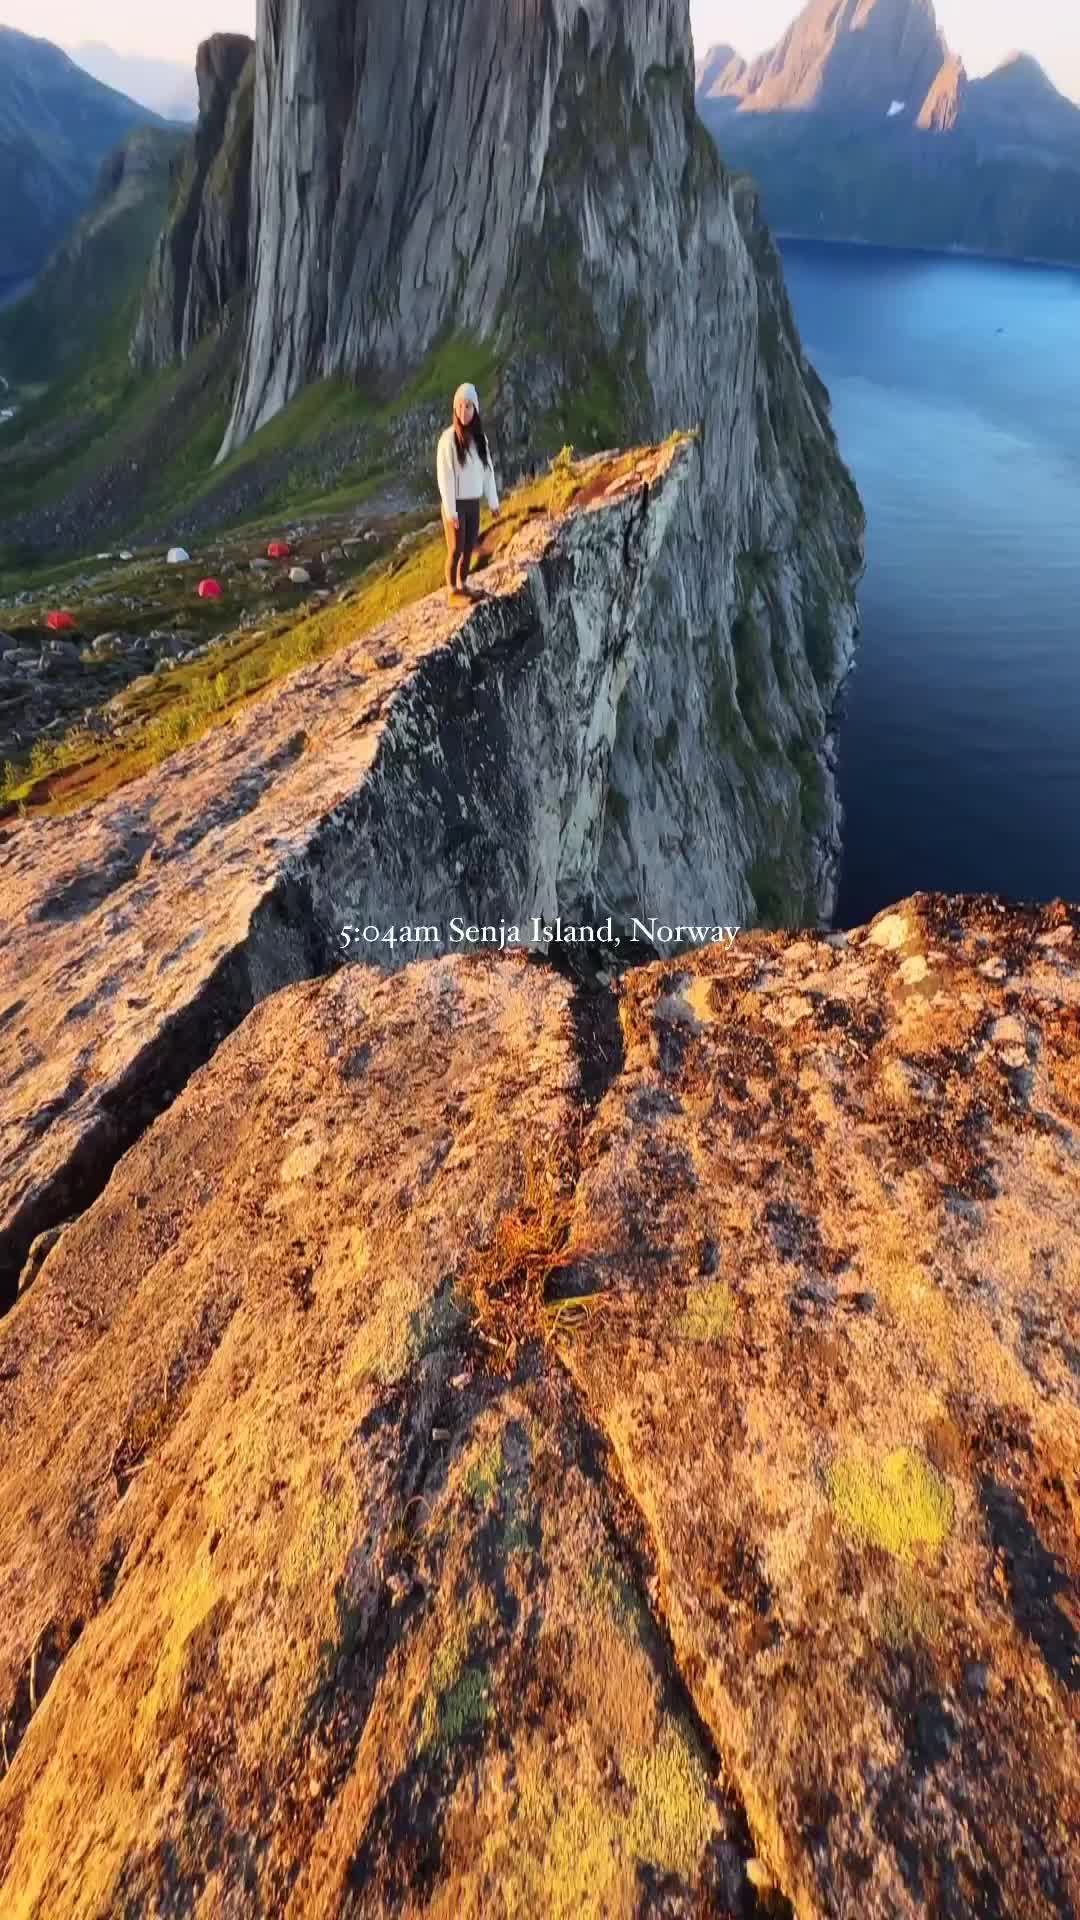 Stunning Views from Selga on Senja Island, Norway